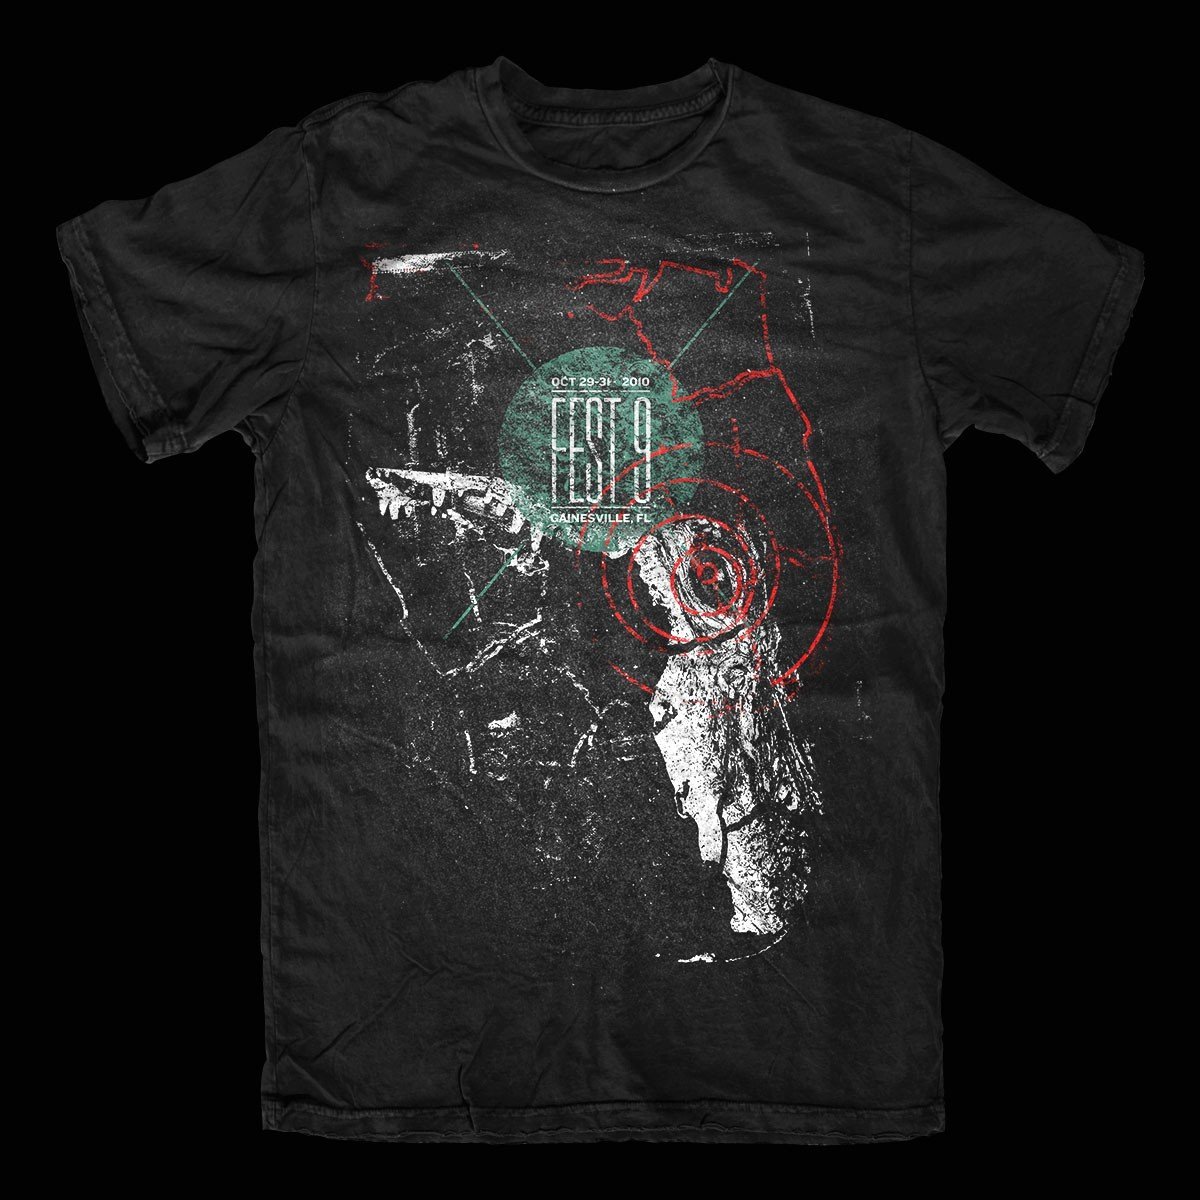 Fest 9 – Shirt Design